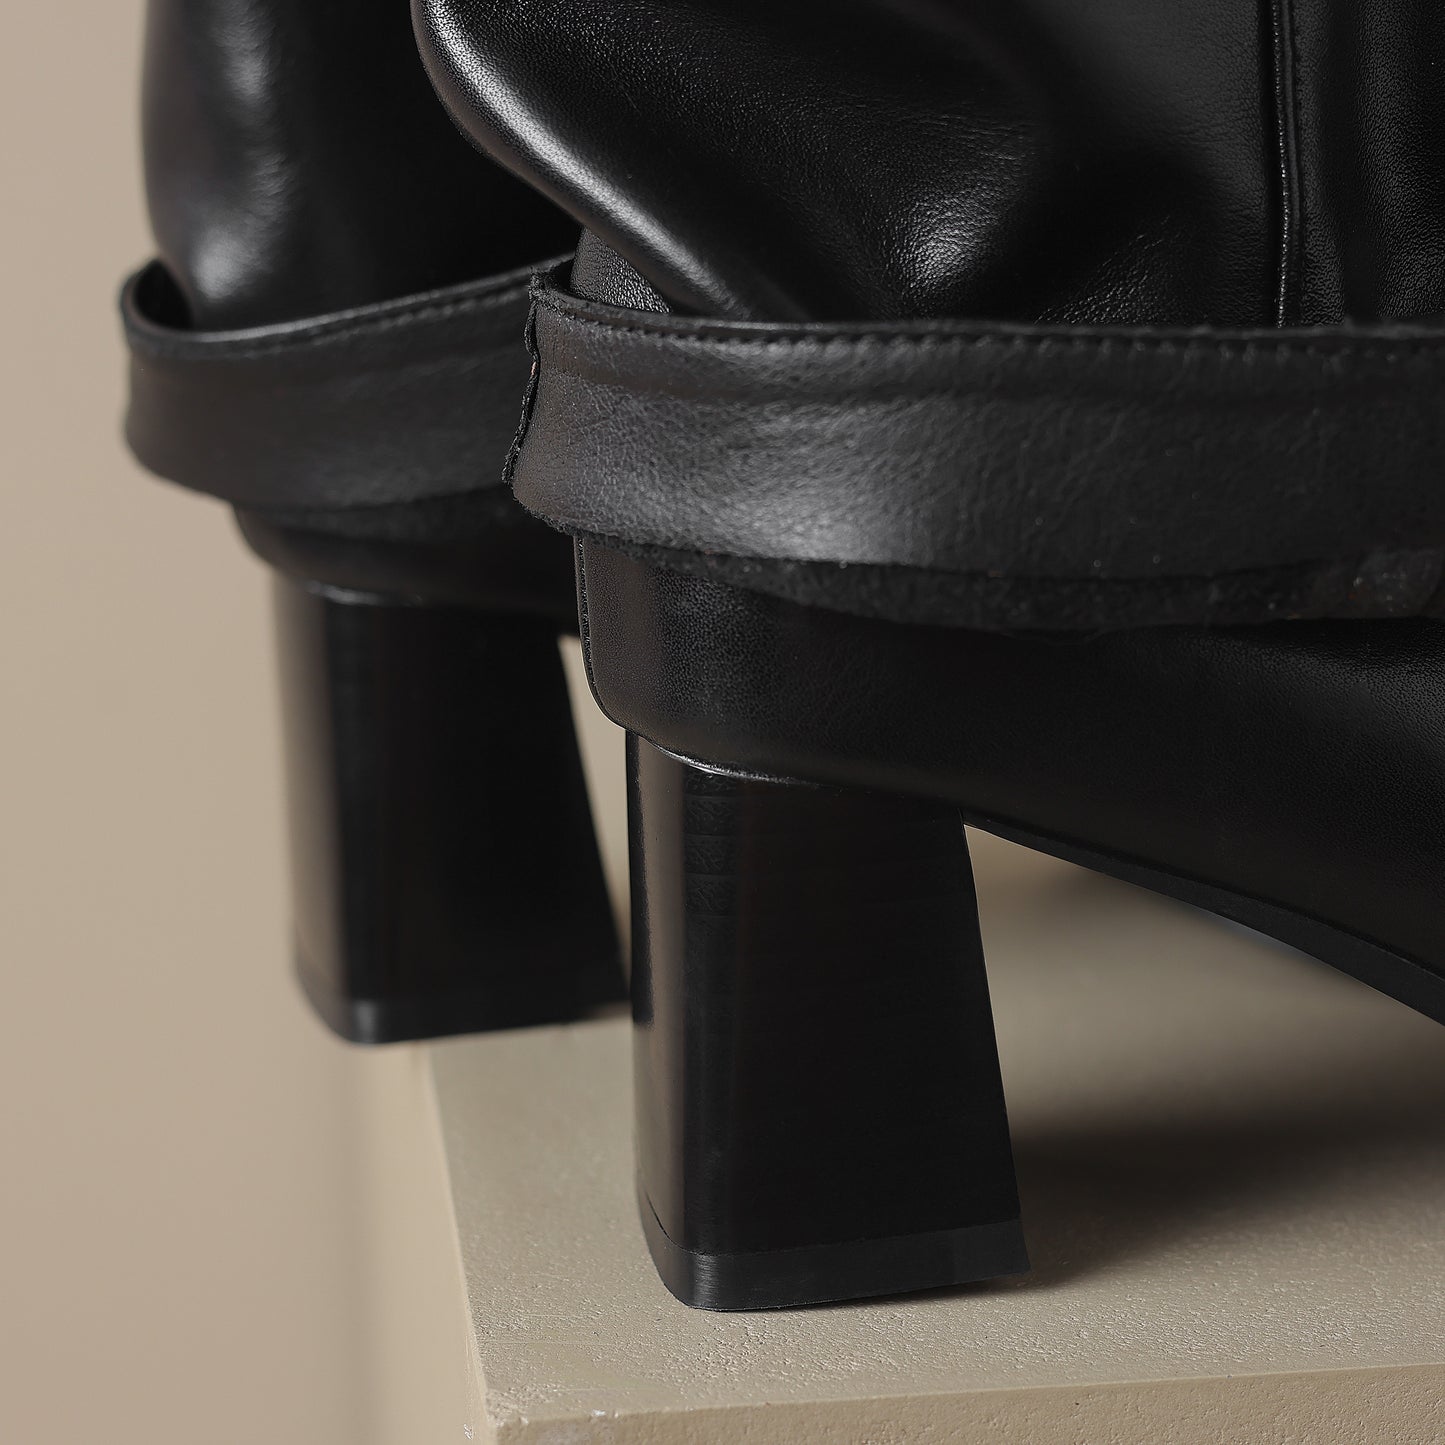 TinaCus Women's Genuine Leather Handmade Chunky Heel Stylish Pull On Mid Calf Boots